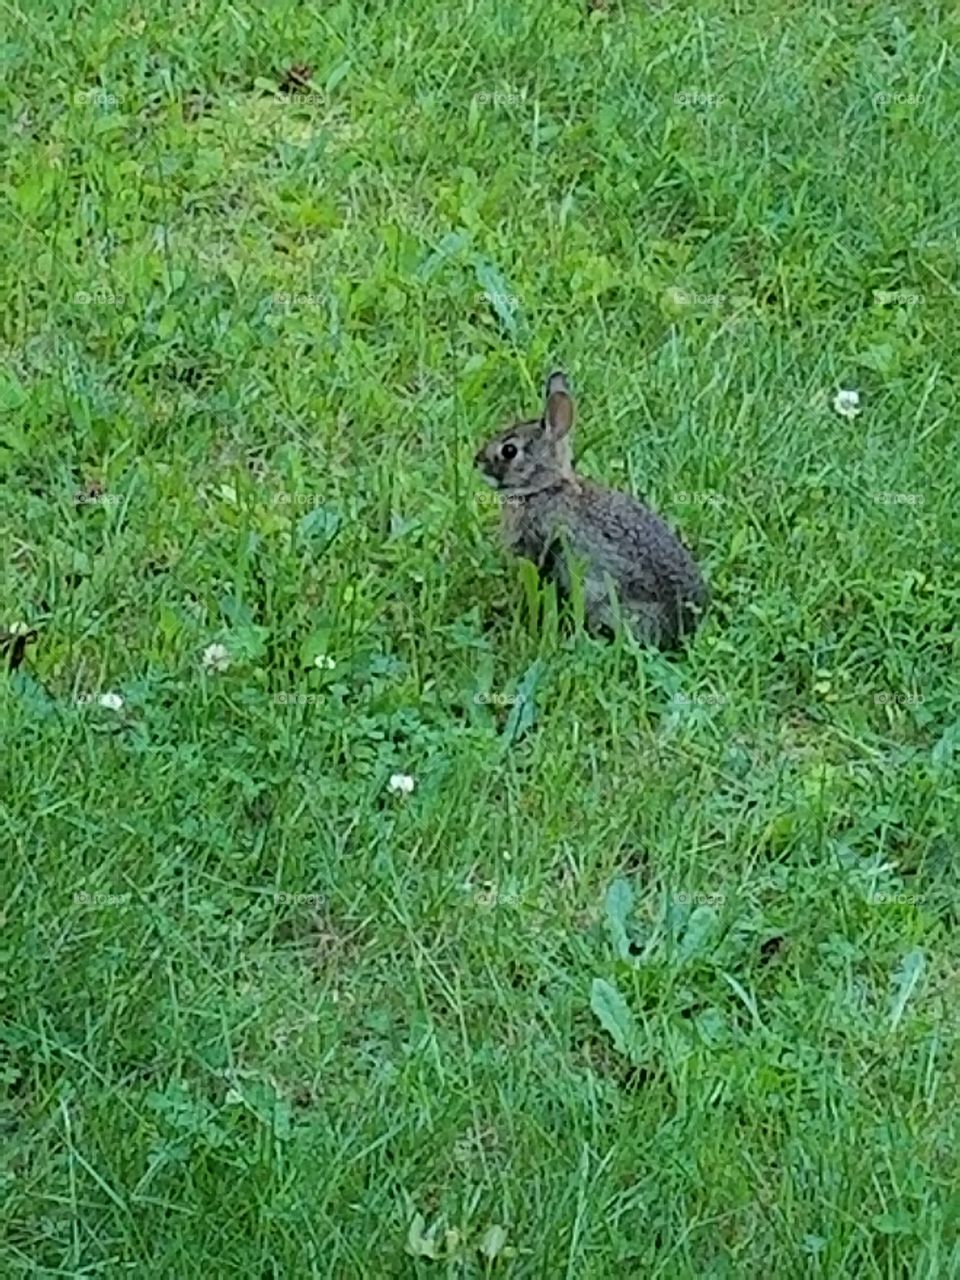 Rabbit in the grass in my yard